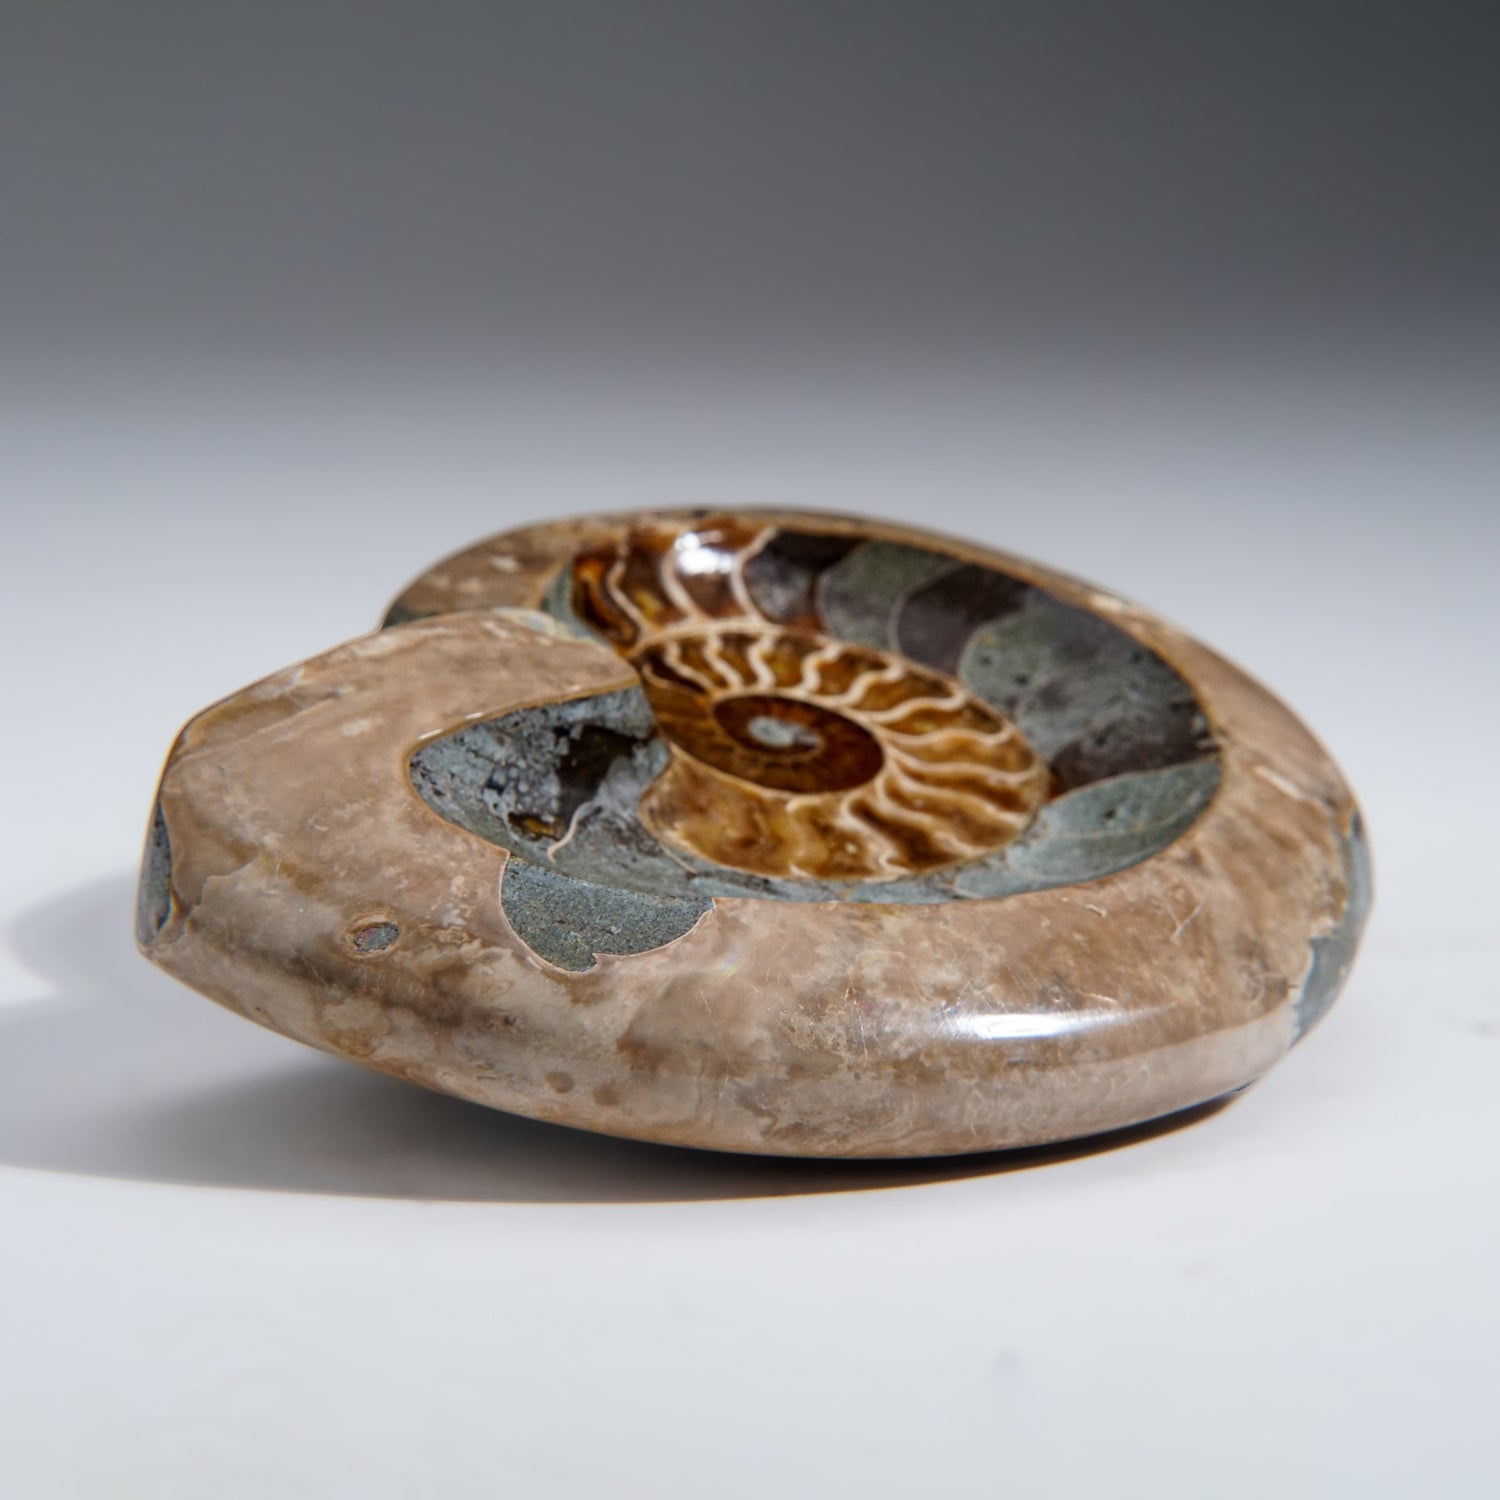 Genuine Polished Ammonite Fossil Dish (1 lb)